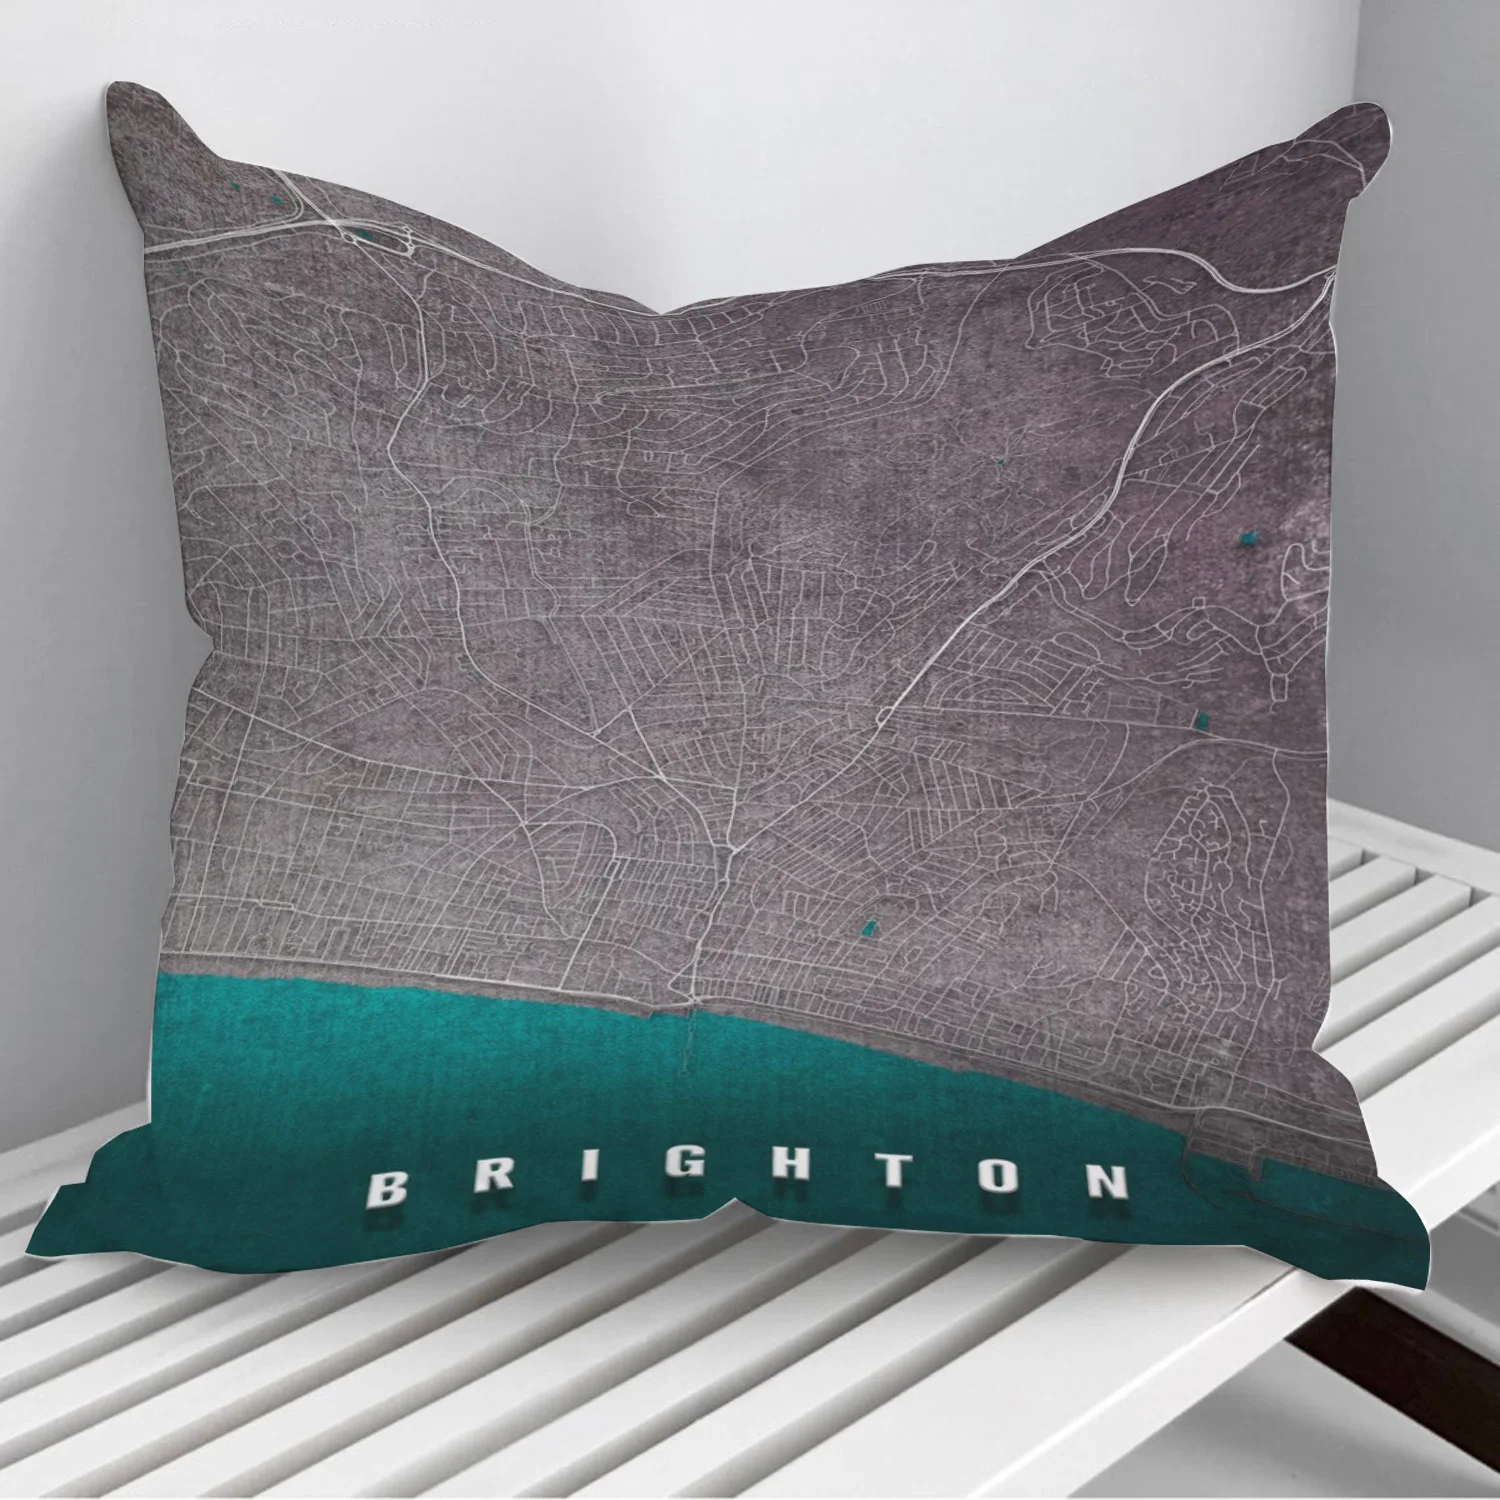 

Brighton City Map Pillowcase Decorative Sofa Cushion Case Bed Pillow Cover Home Decor Car Cushion Cover 45*45cm